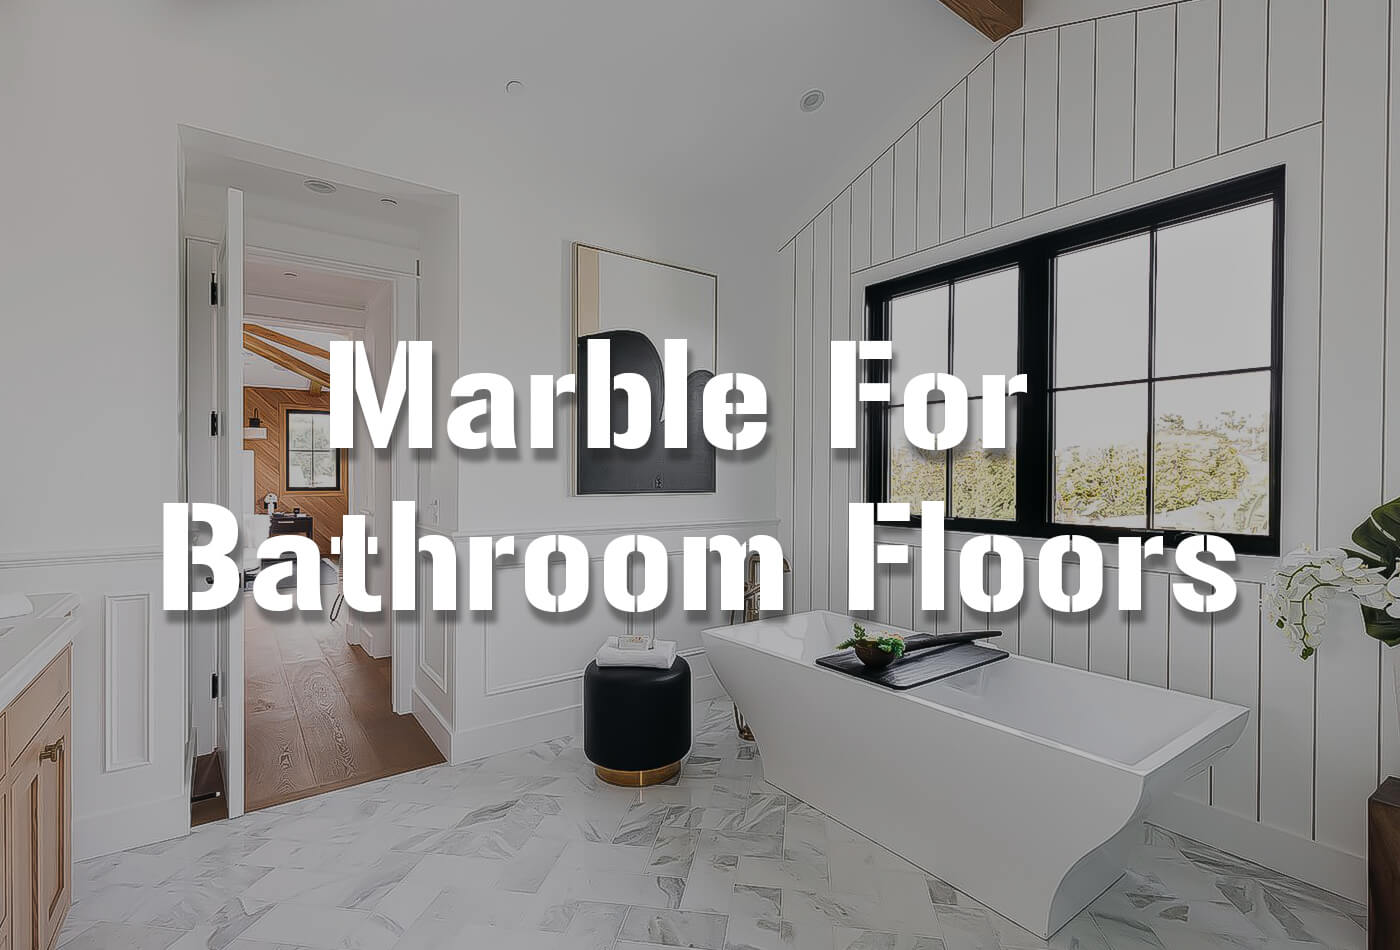 Marble for Bathroom Floors - From UK’s Best Sellers